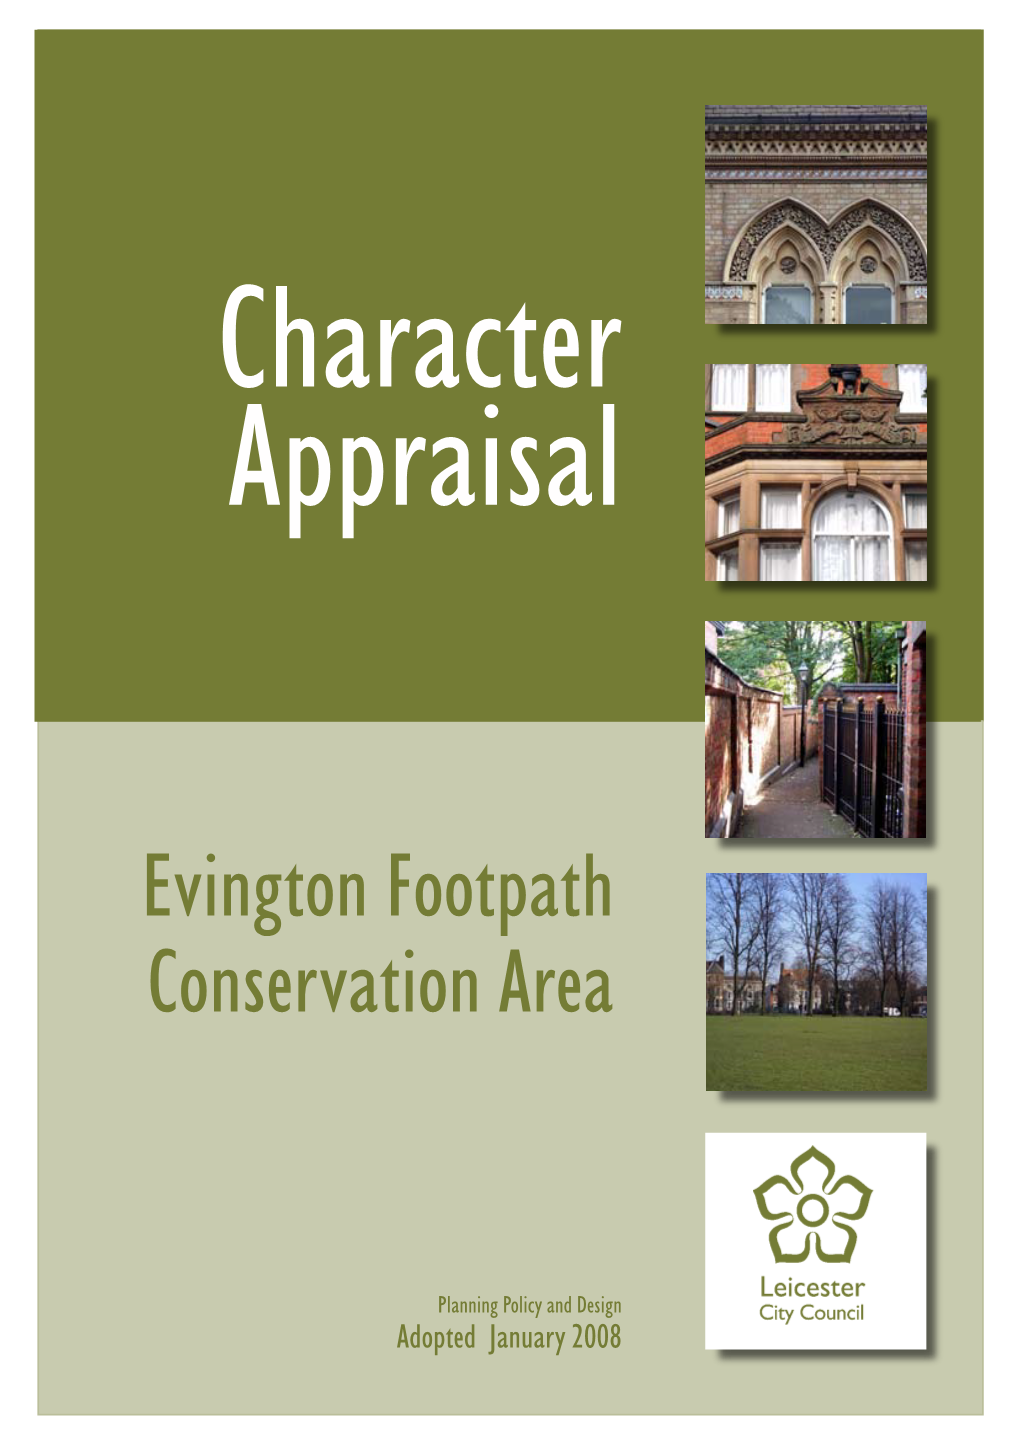 Evington Footpath Conservation Area Character Appraisal